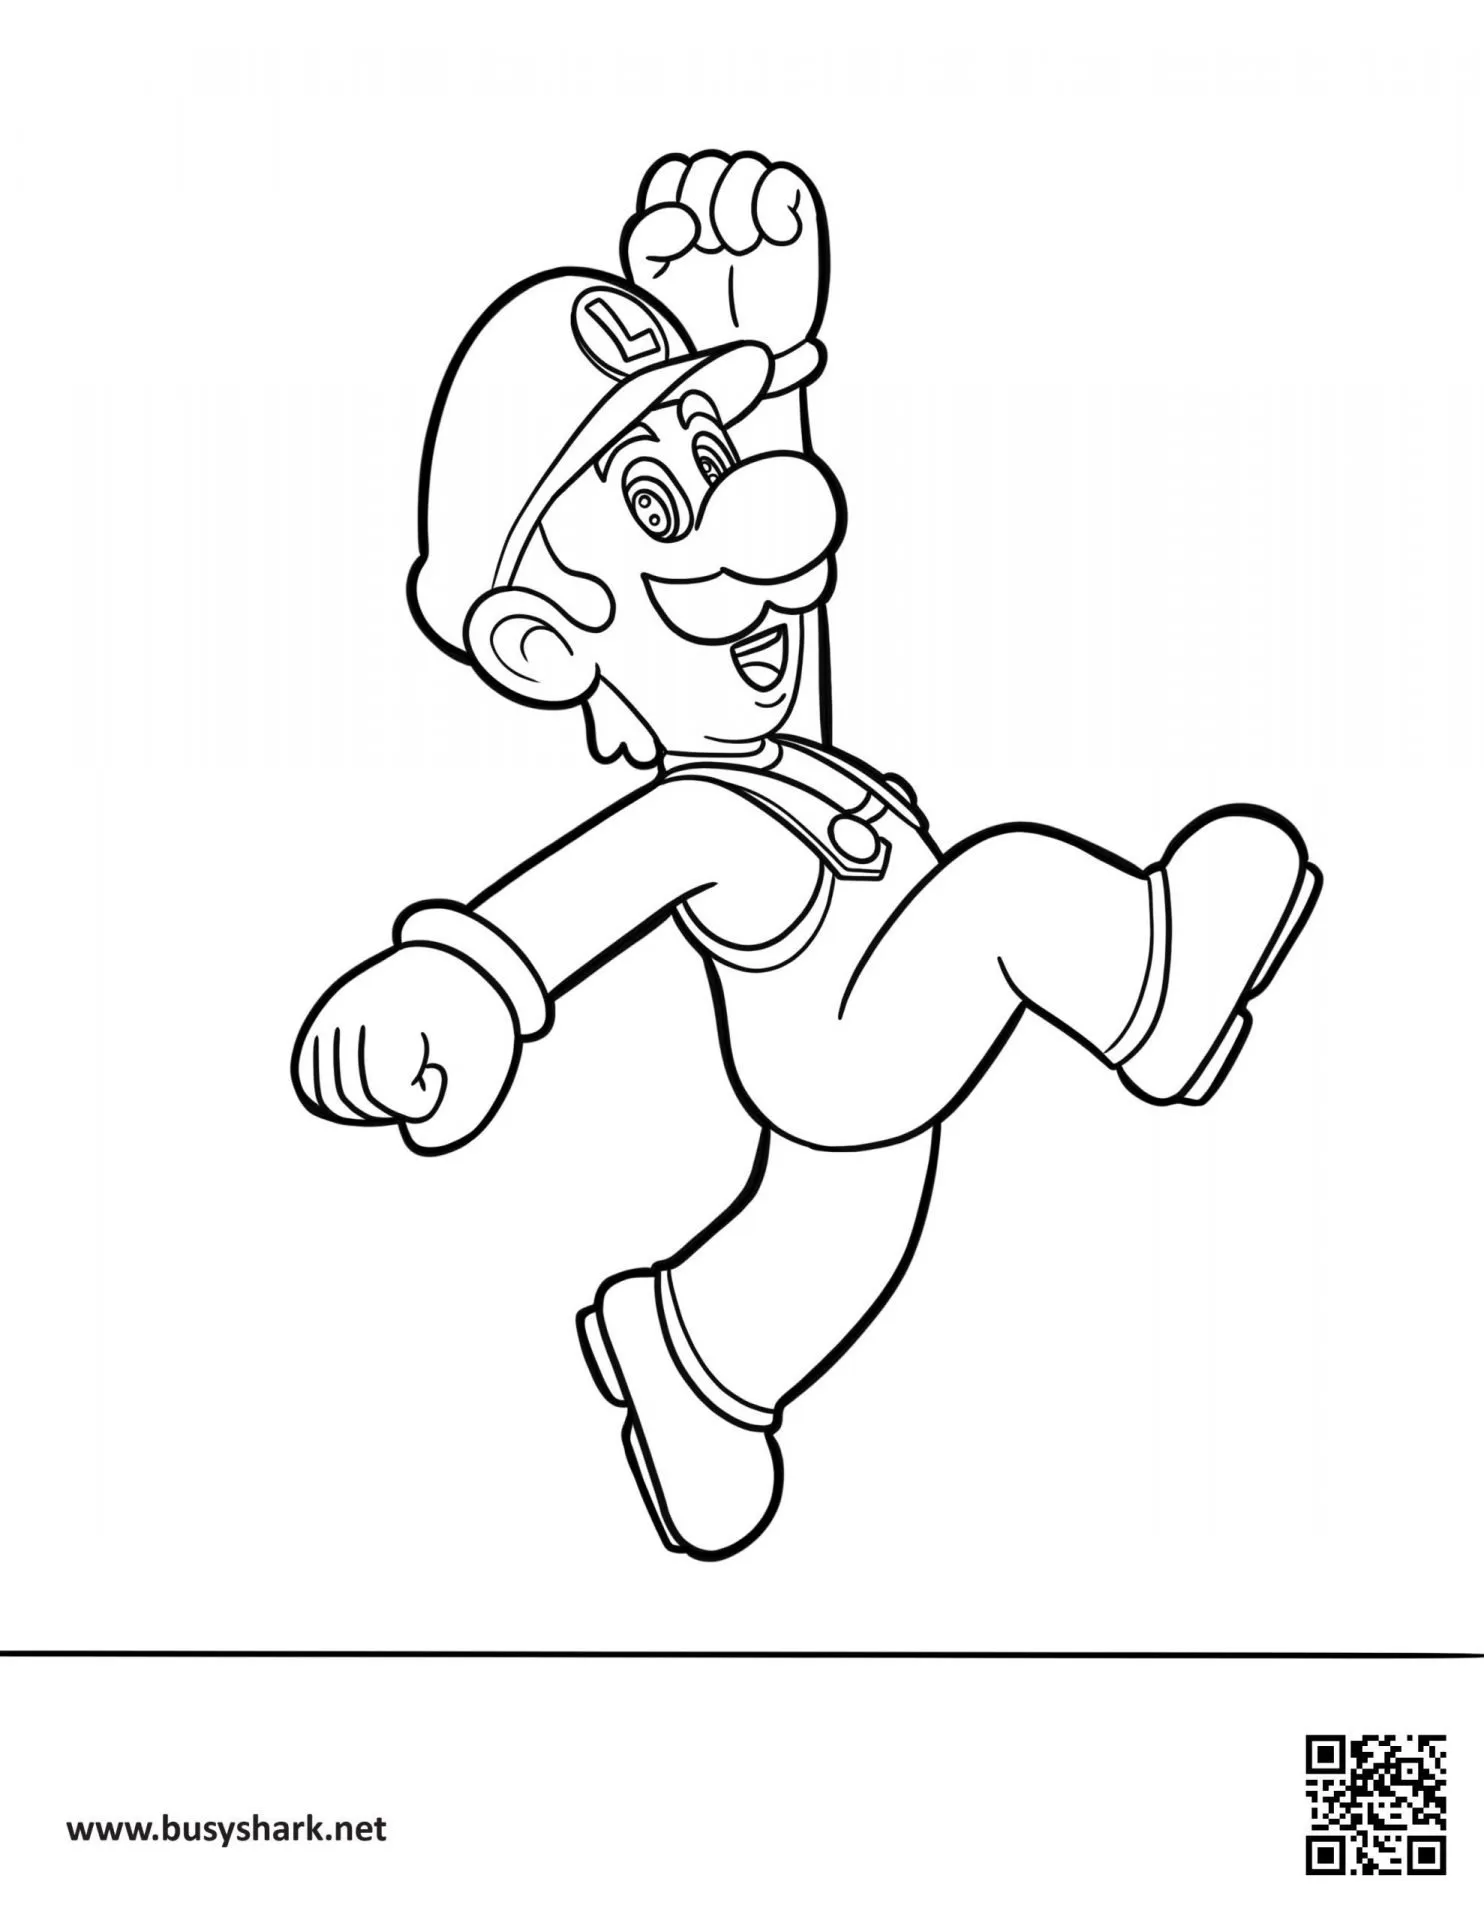 Luigi coloring page free printable